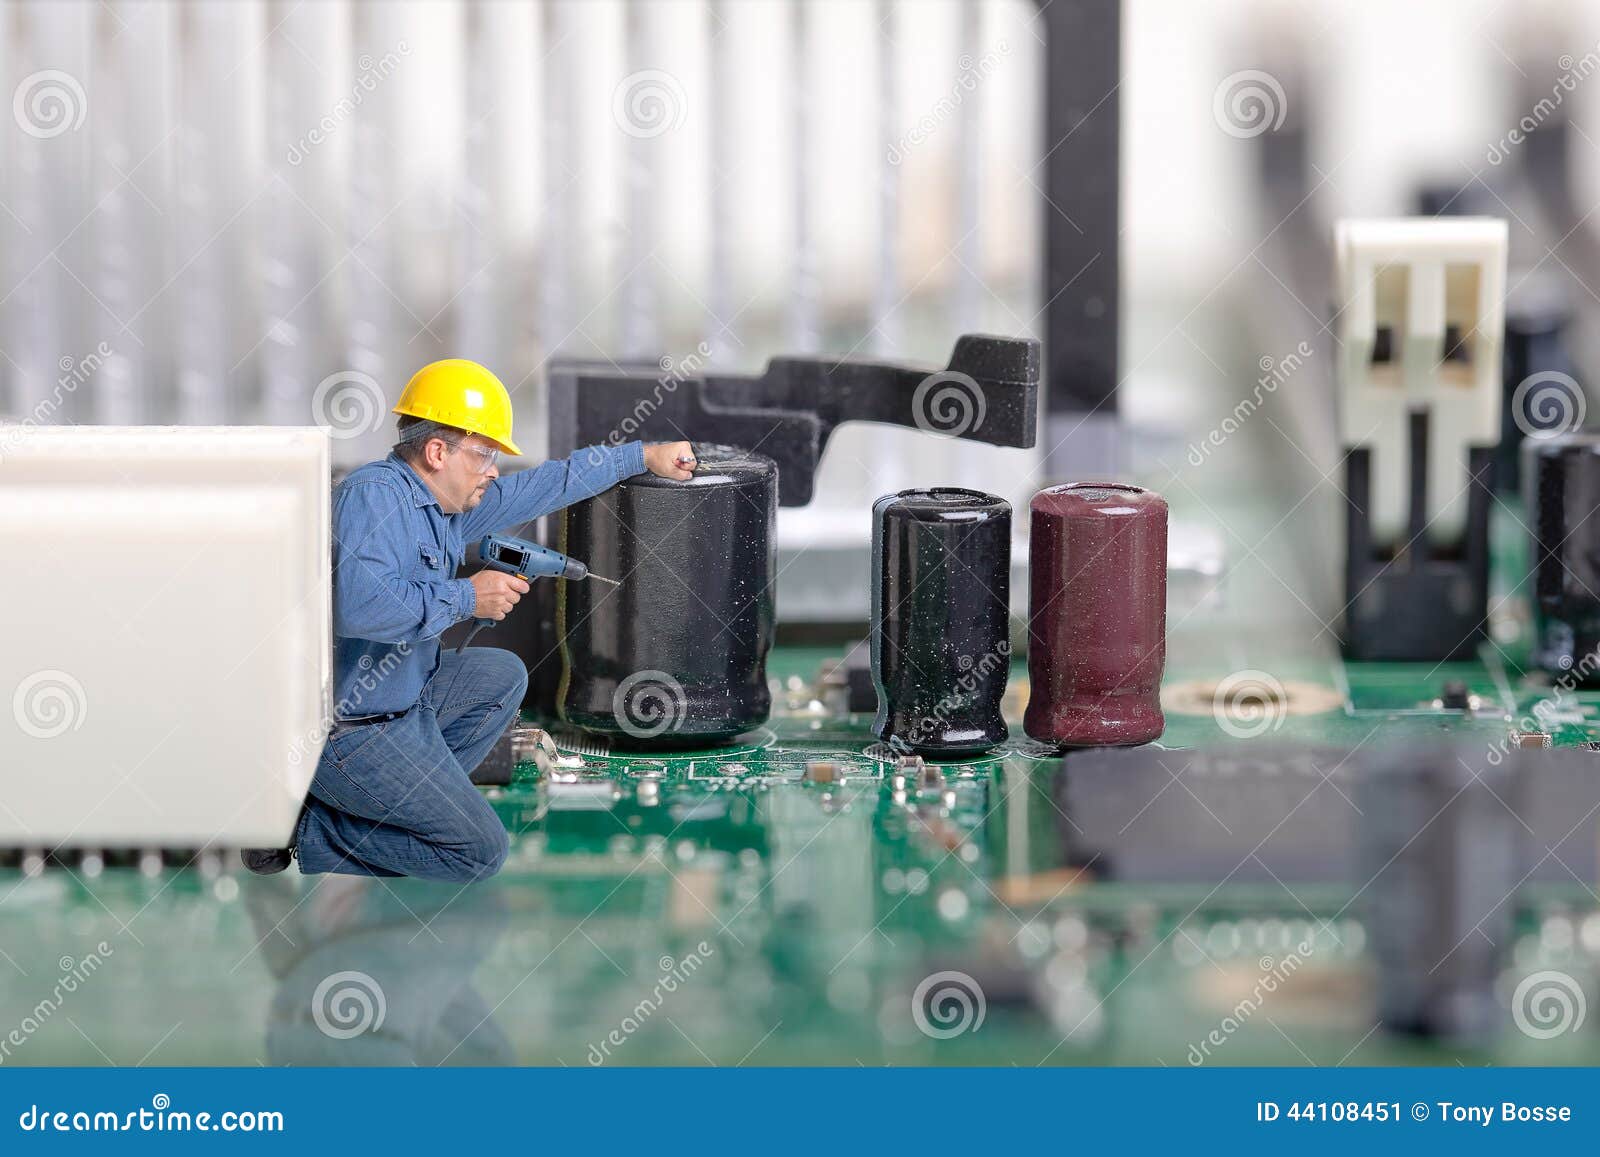 computer, electronics repair